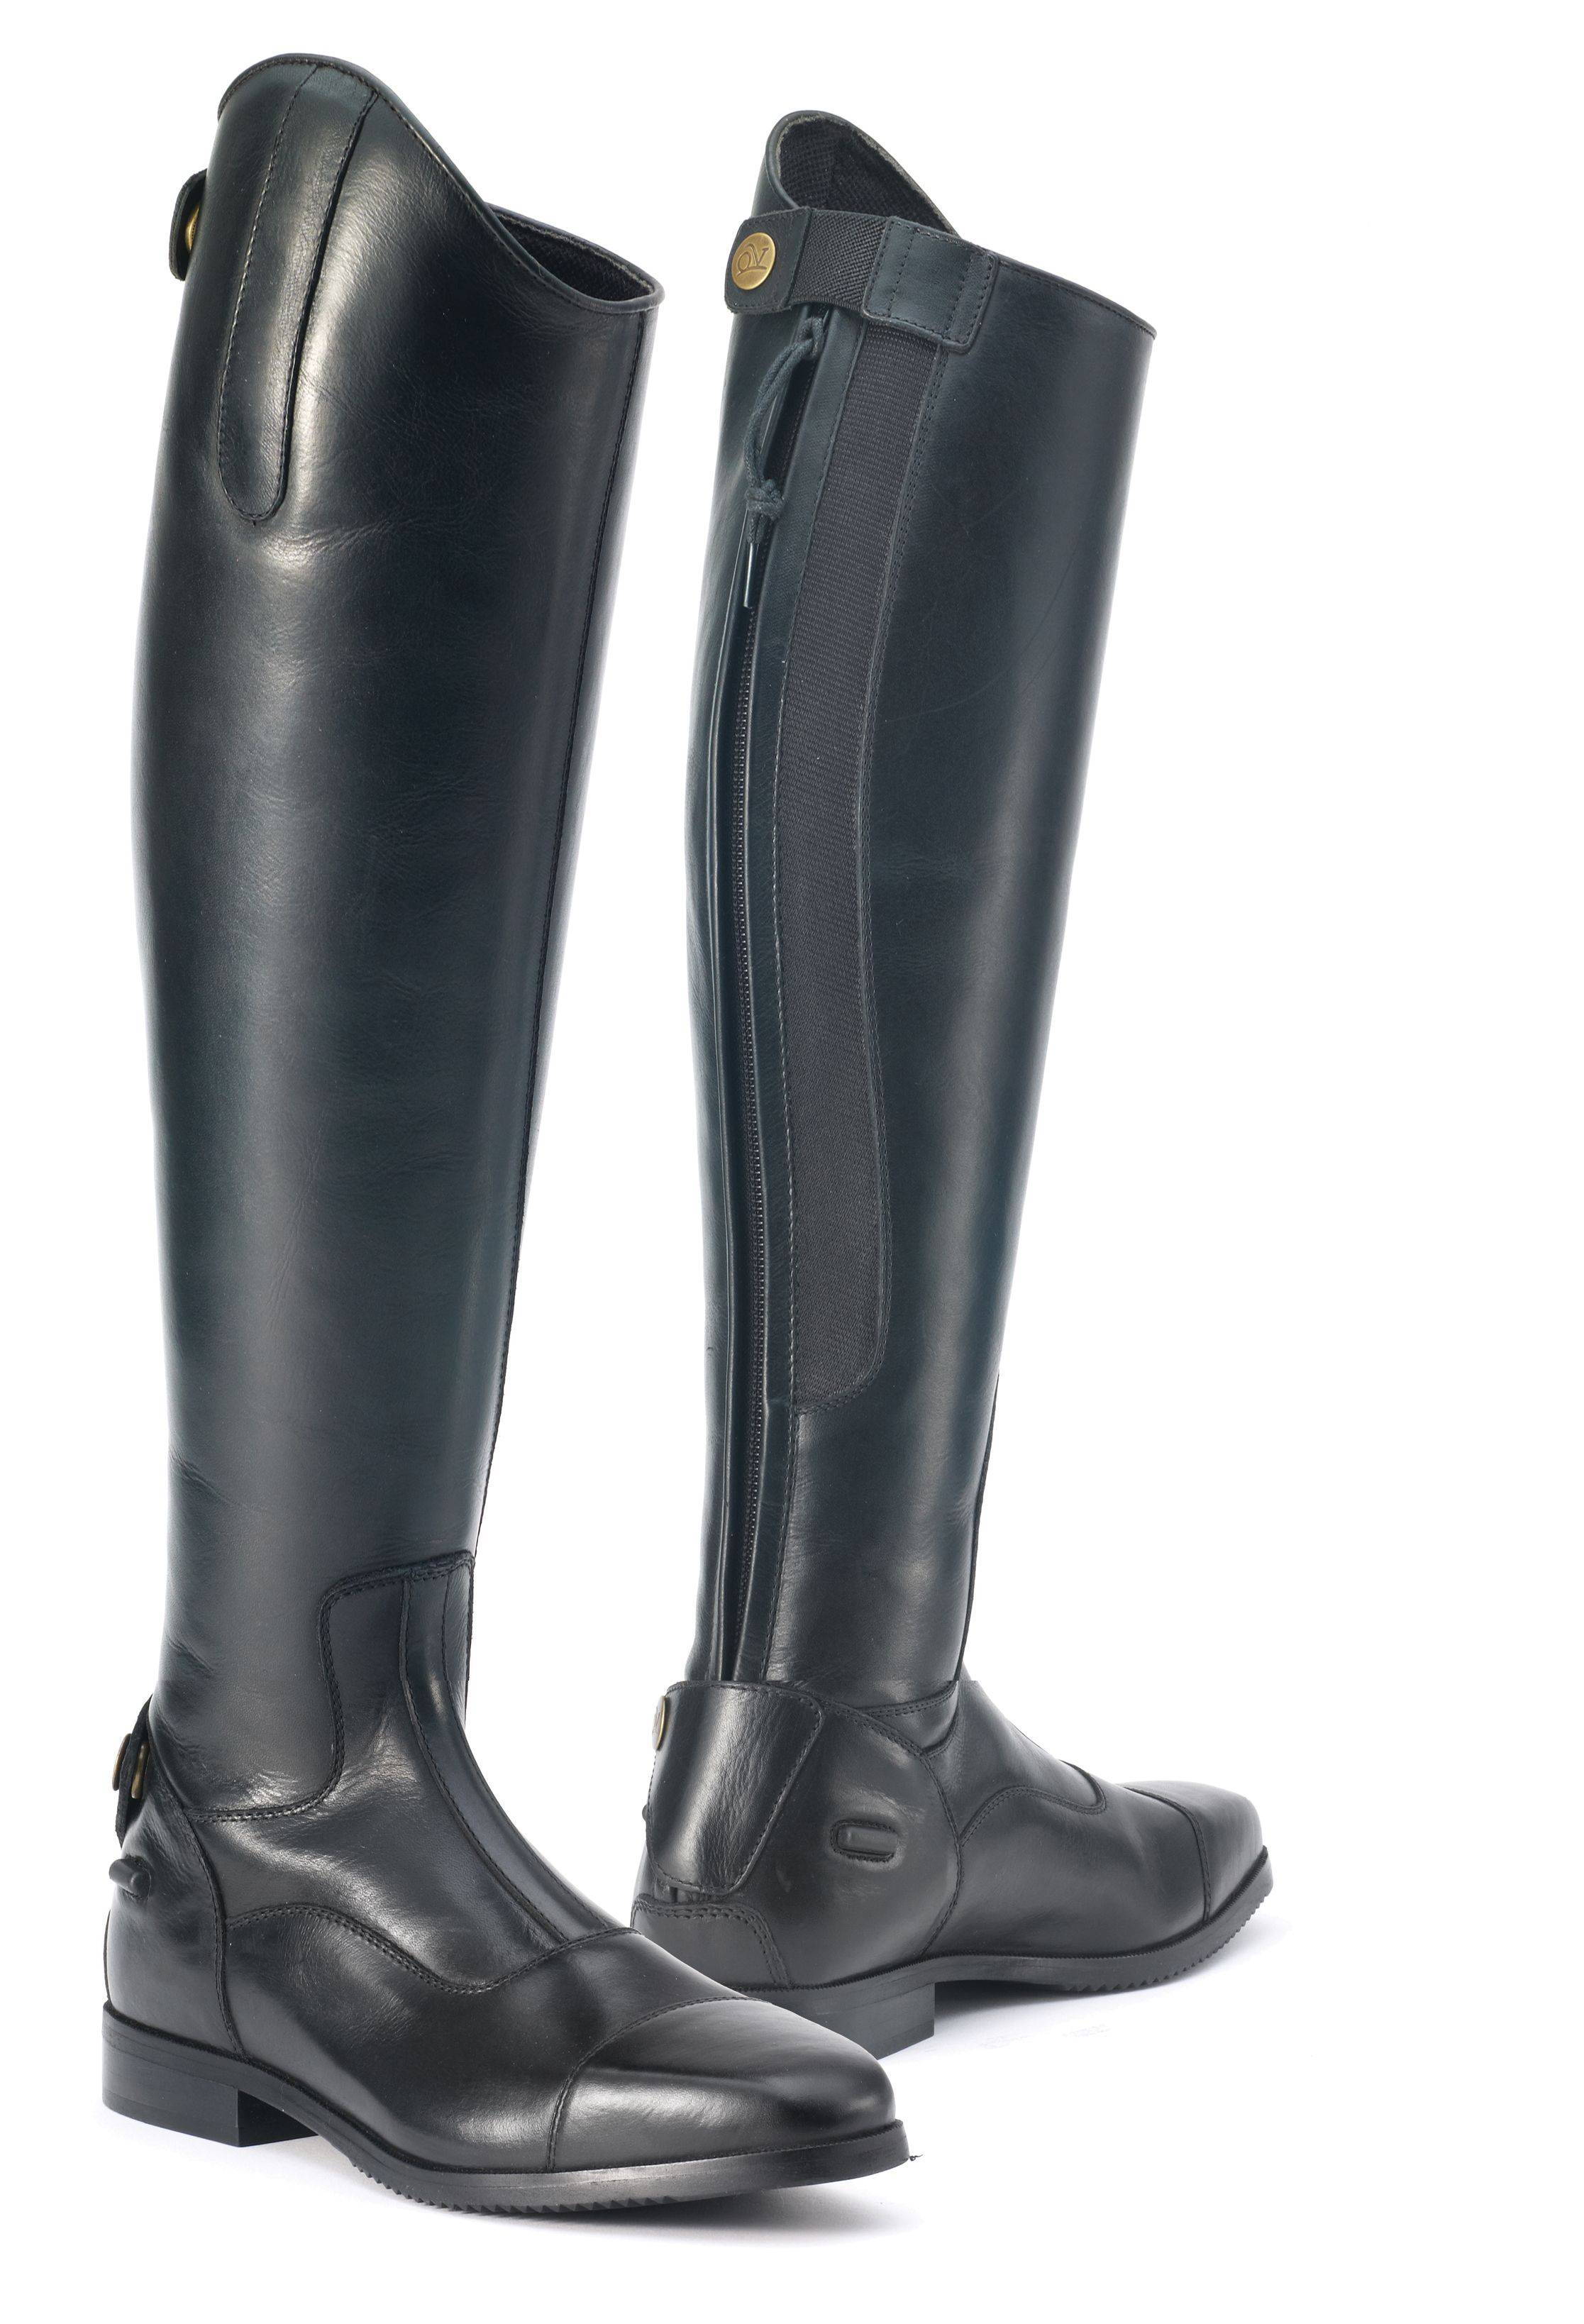 Ovation Olympia Tall Boots - Ladies, Black